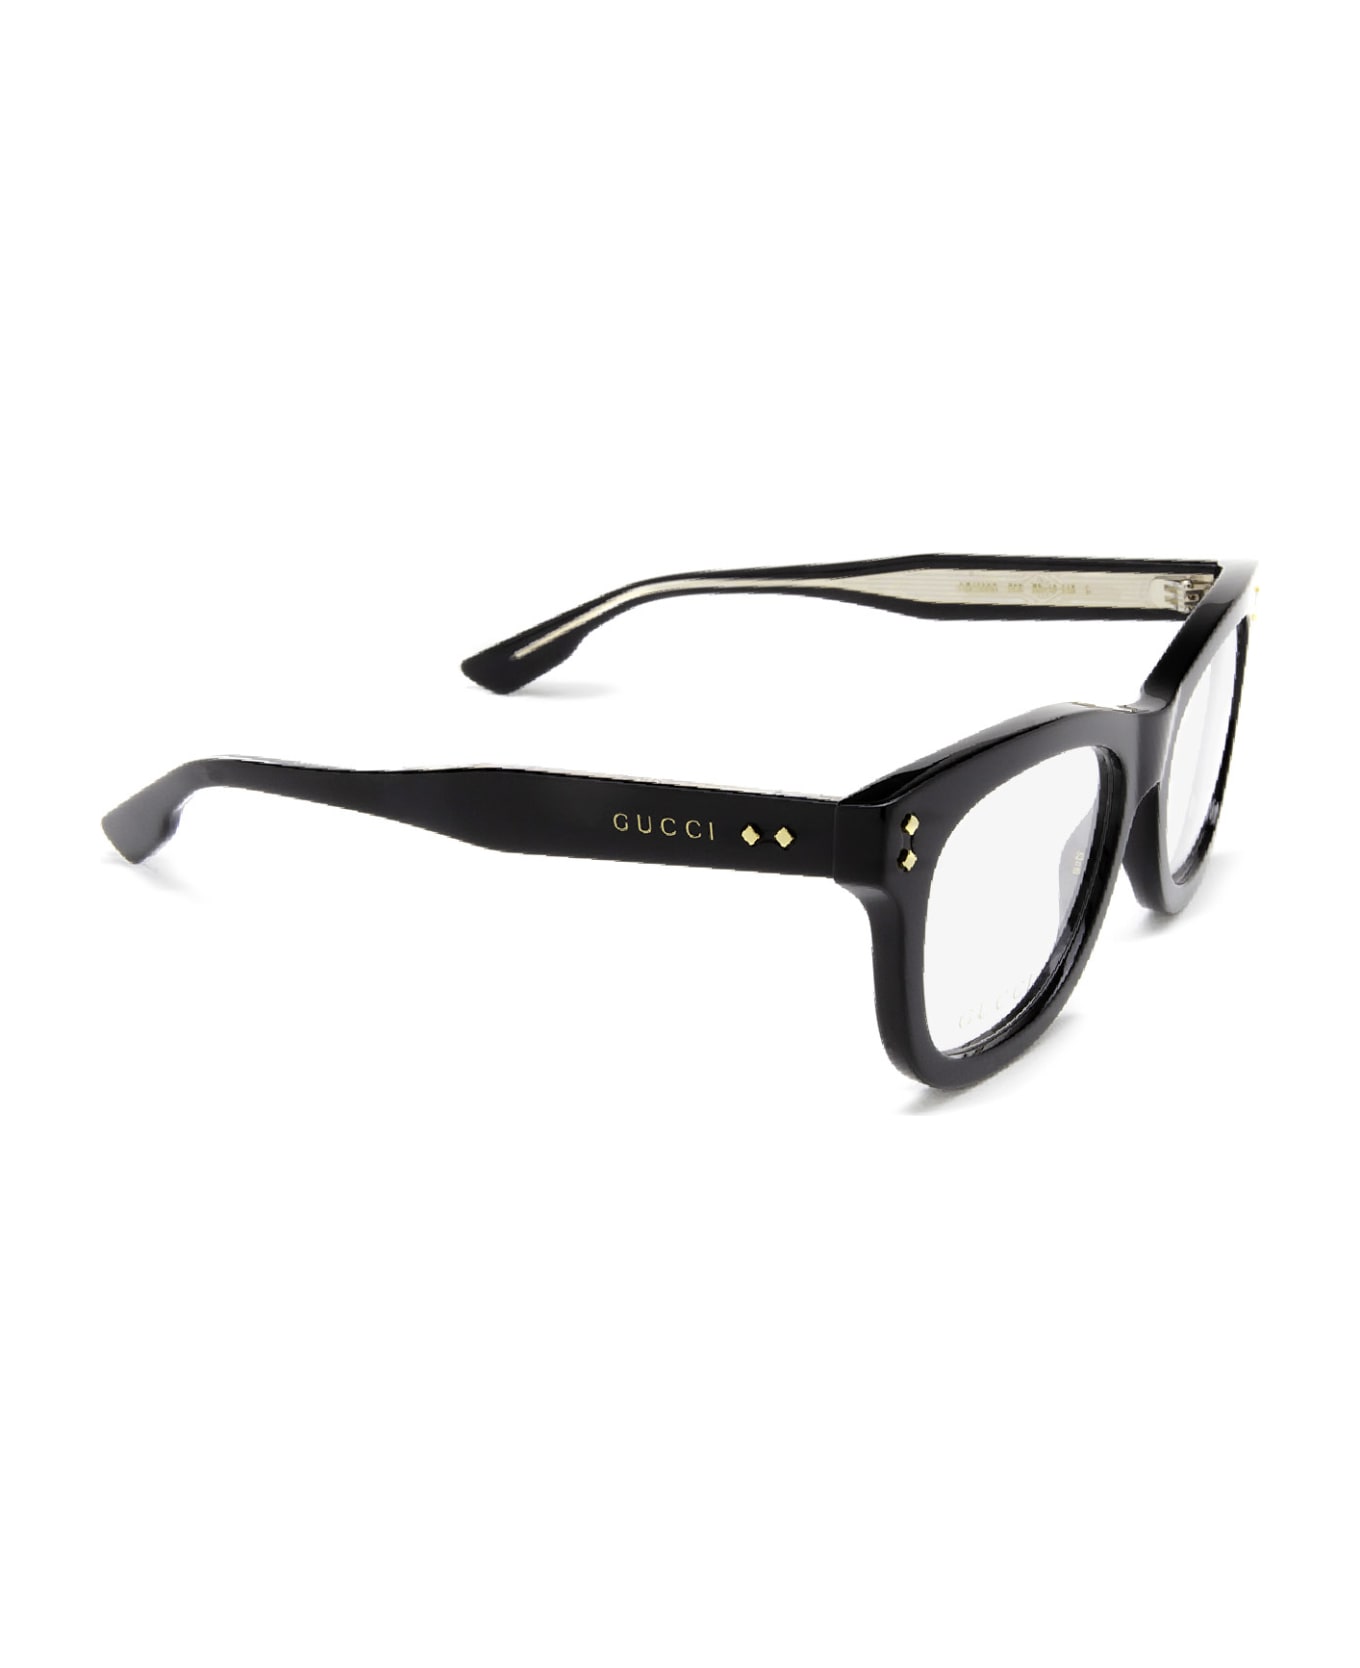 Gucci Eyewear Gg1086o Black Glasses - Black